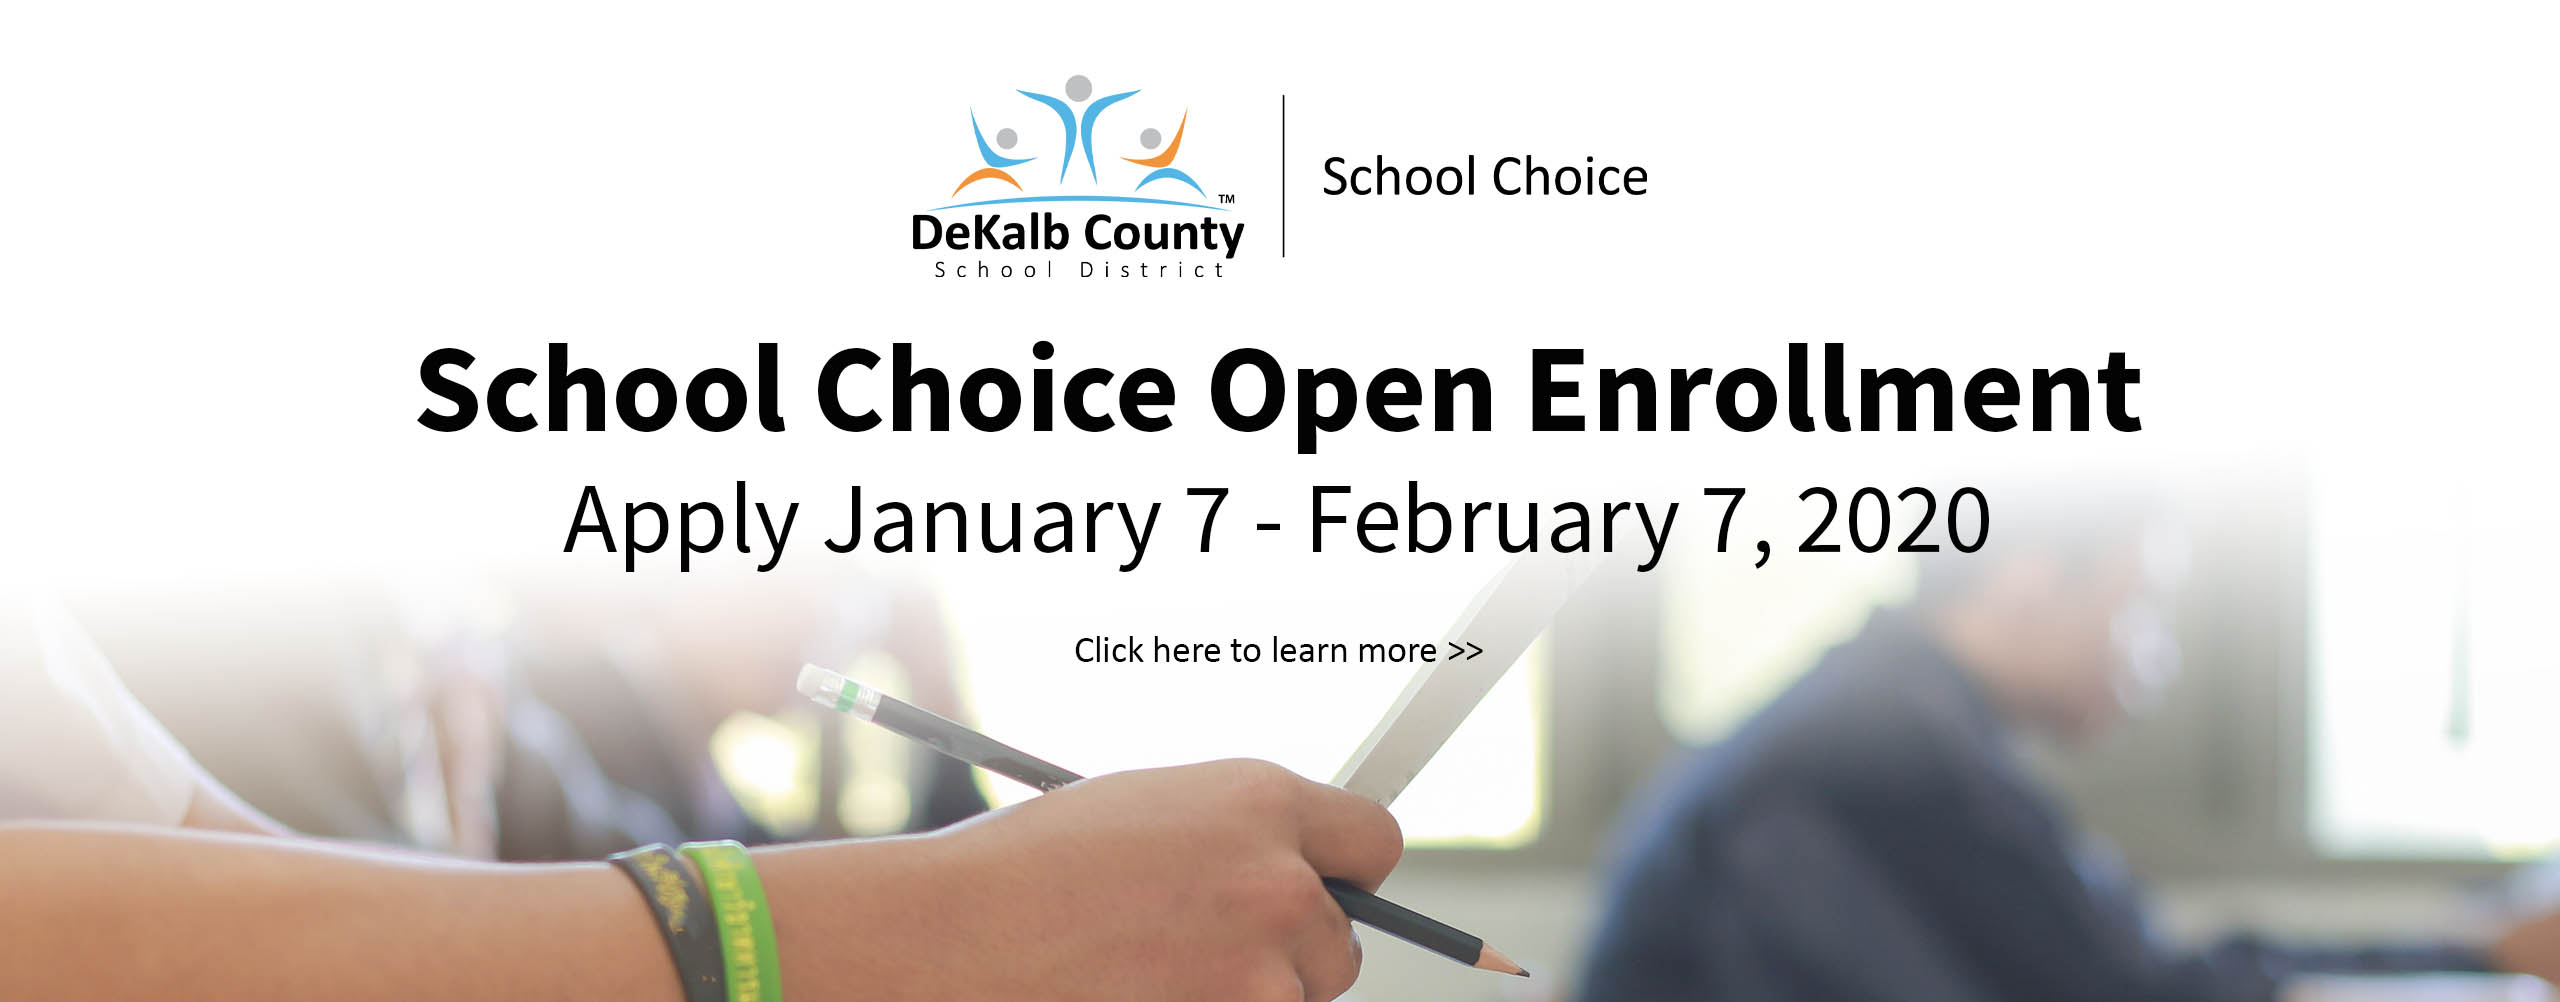 school choice web banner 2020